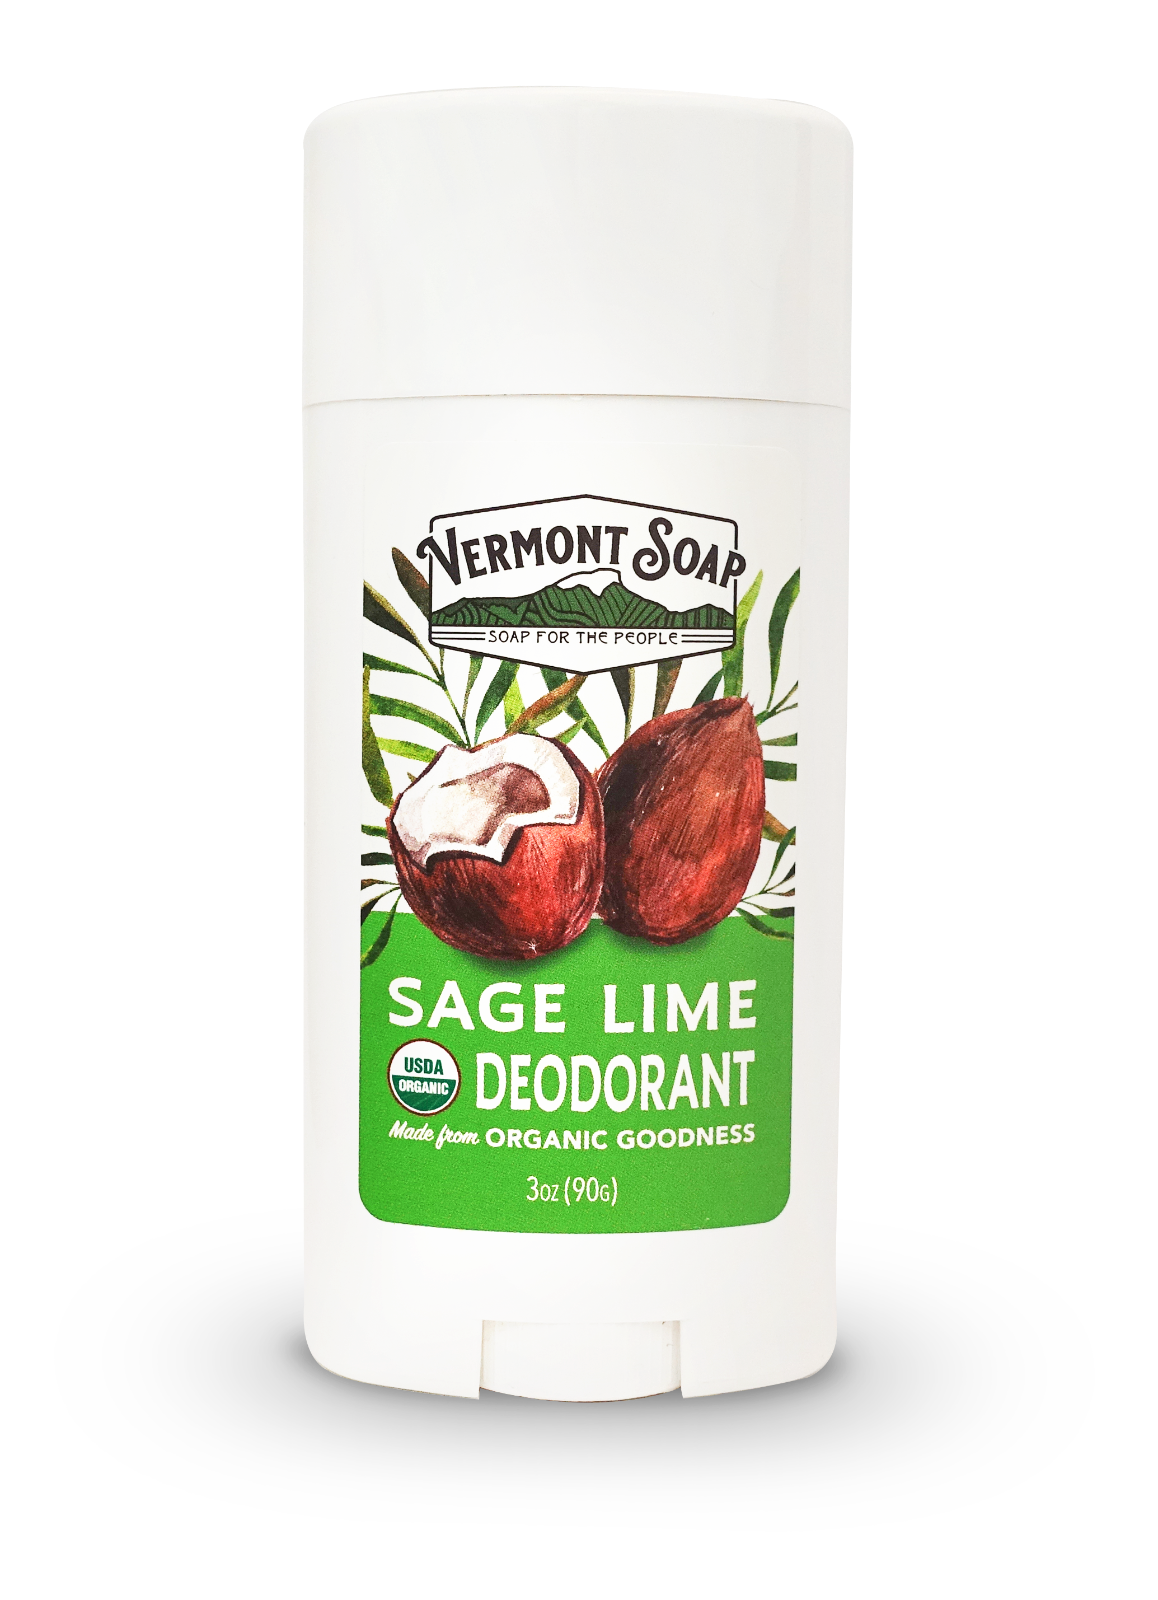 Vermont Soap Organic Deodorant - Sage Lime